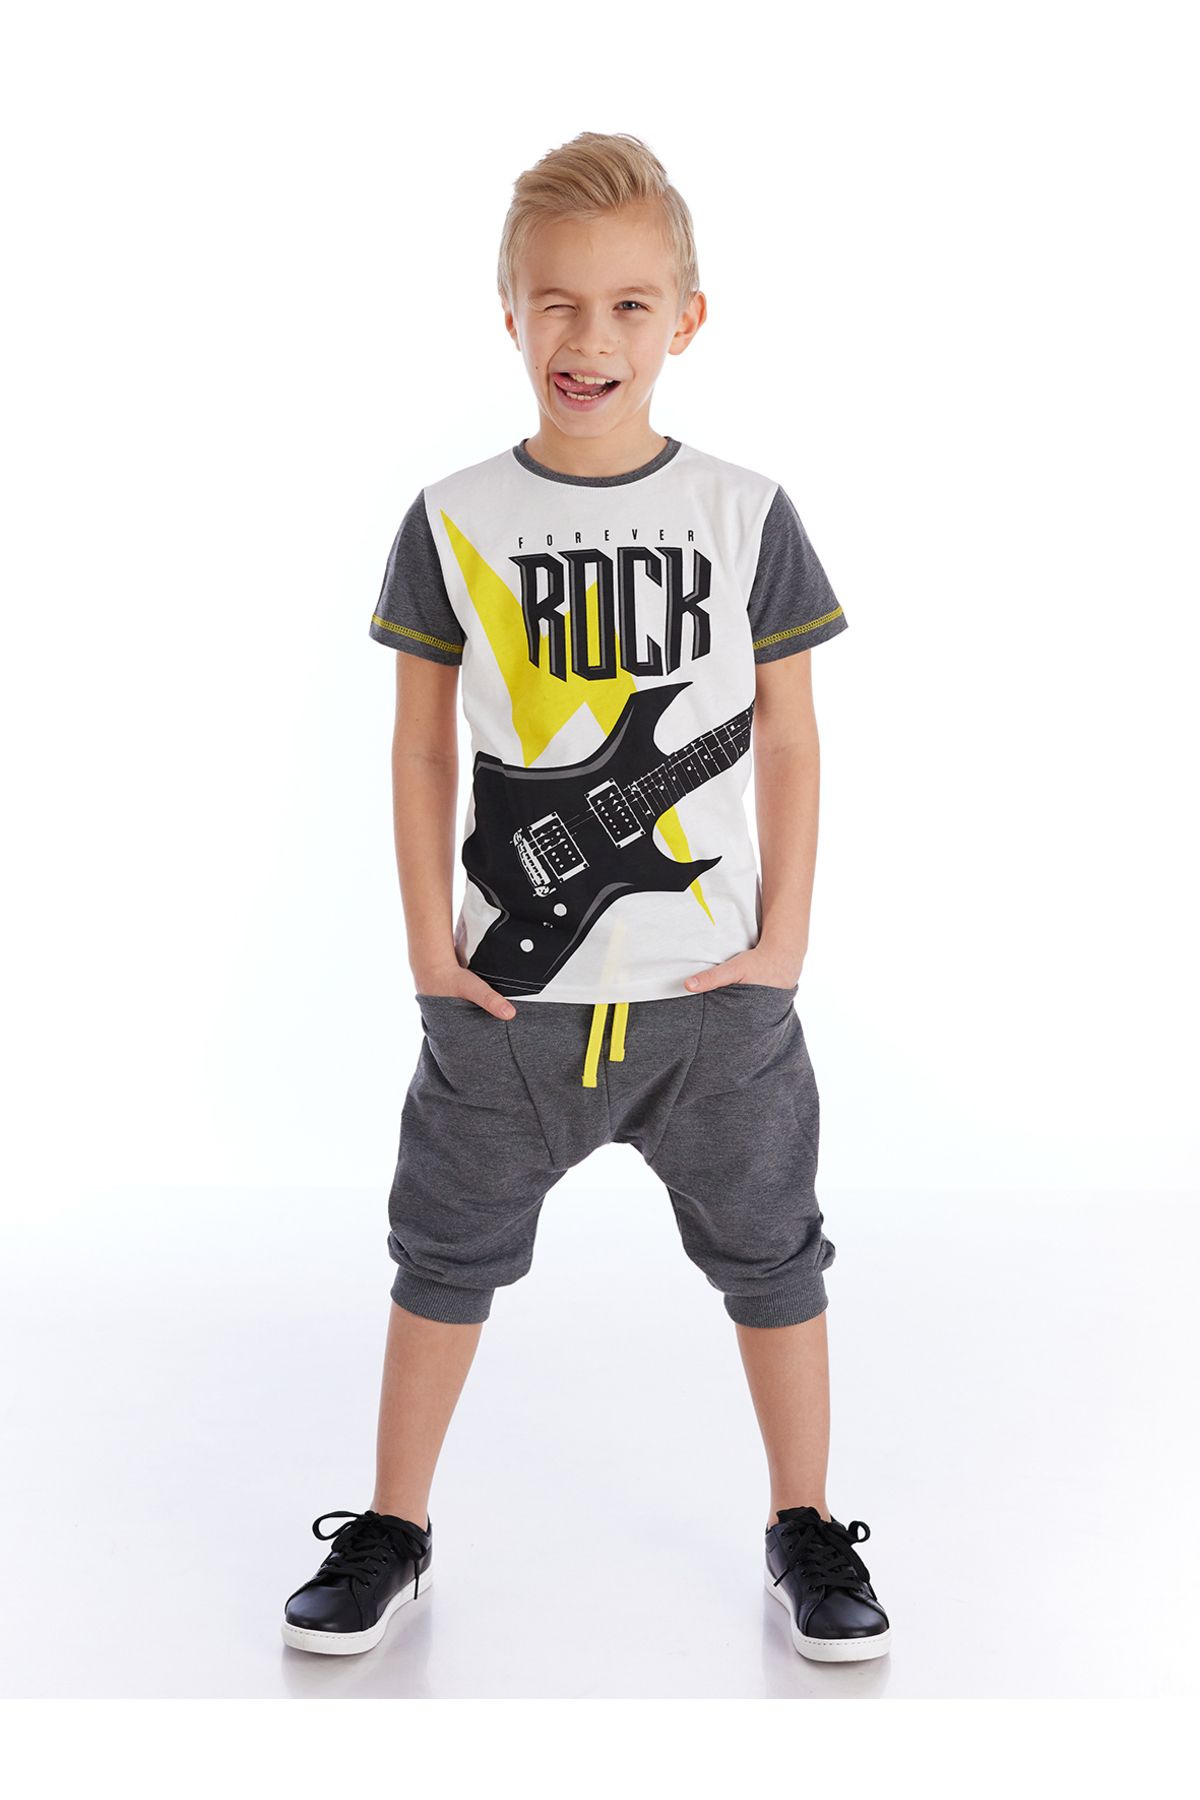 MSHB&G Thunder Rock Erkek Çocuk T-shirt Kapri Şort Takım